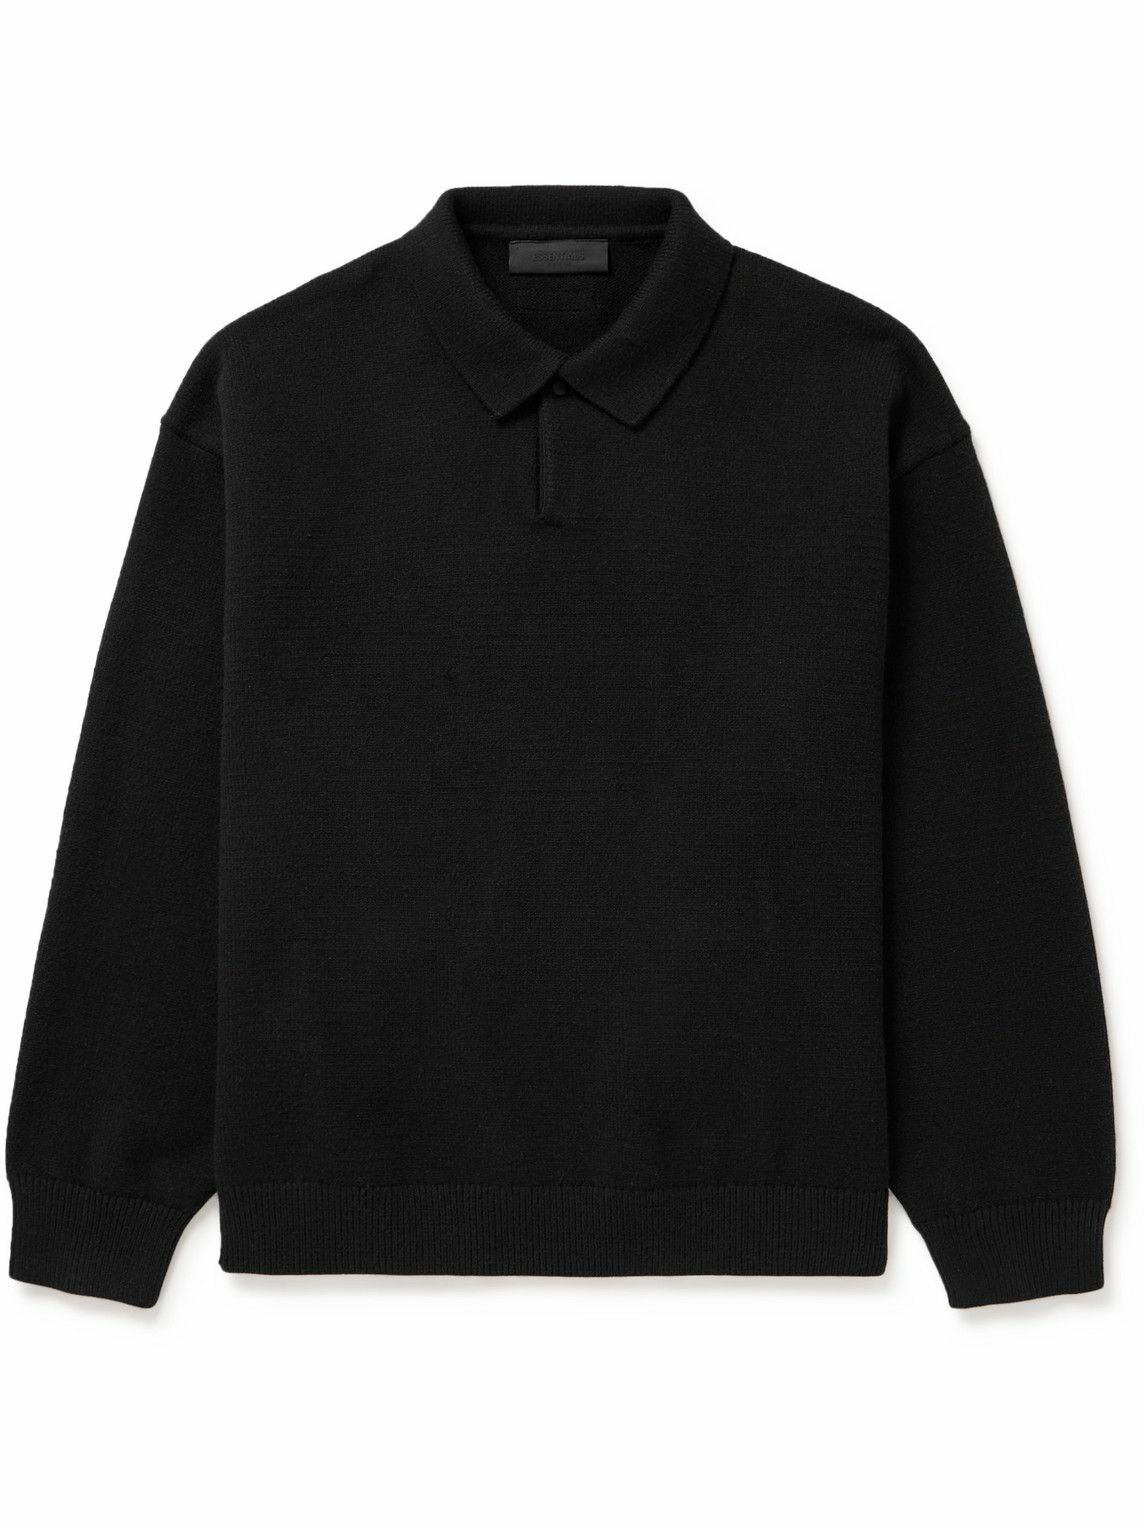 Logo-Appliquéd Cotton-Blend Jersey Mock-Neck Sweatshirt